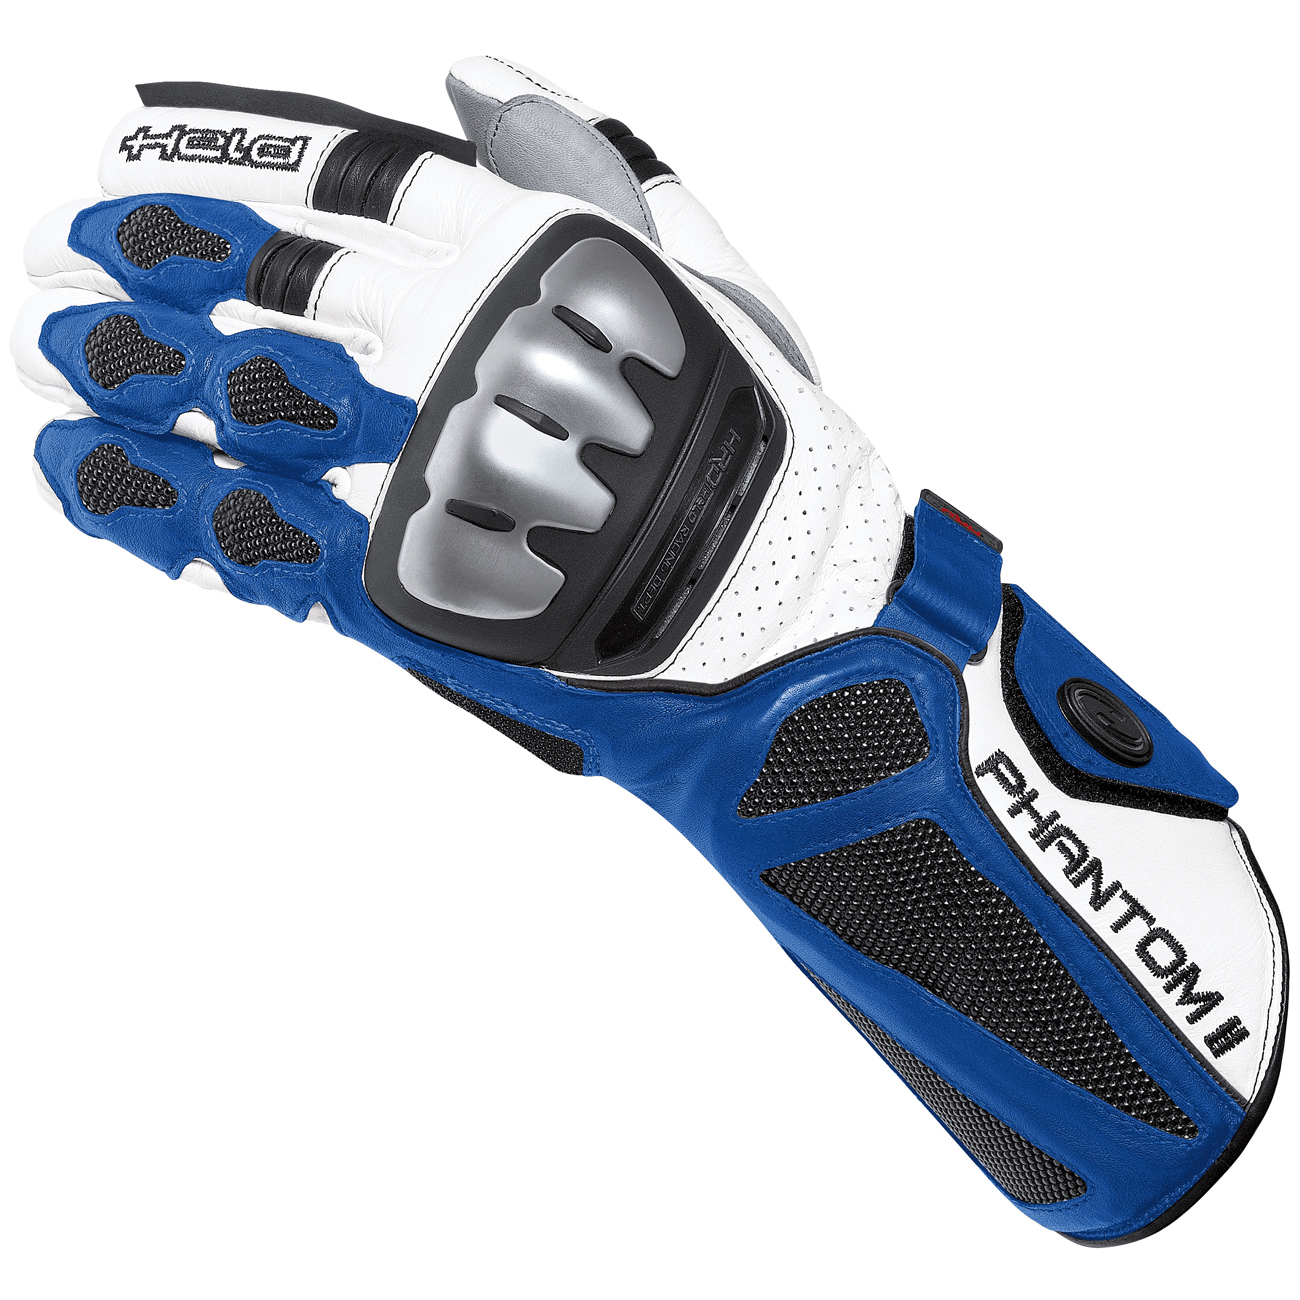 Phantom II Race glove